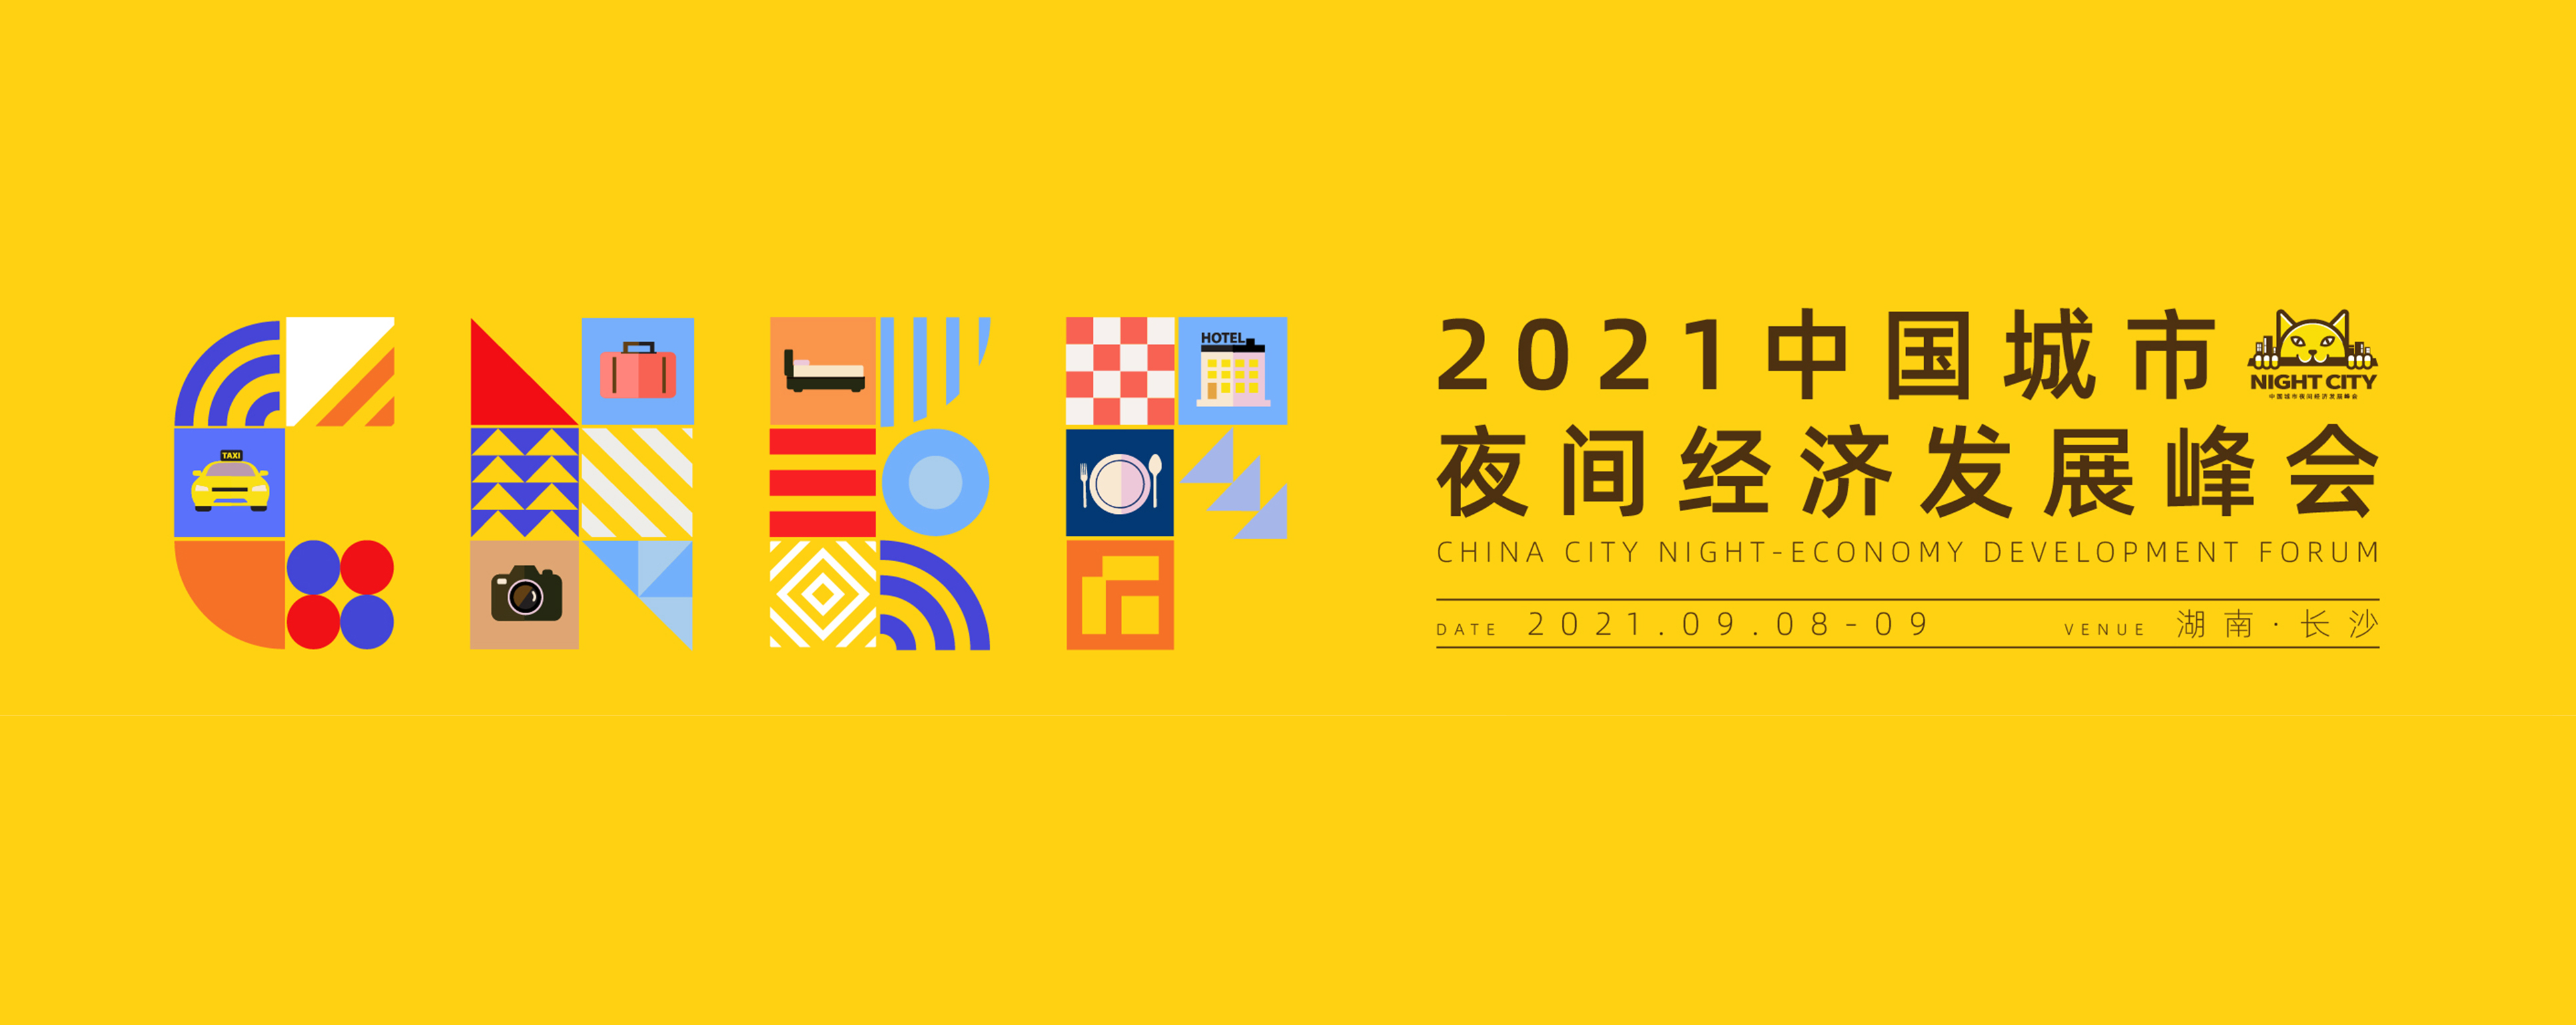 2021CNEF中国城市夜间经济发展峰会